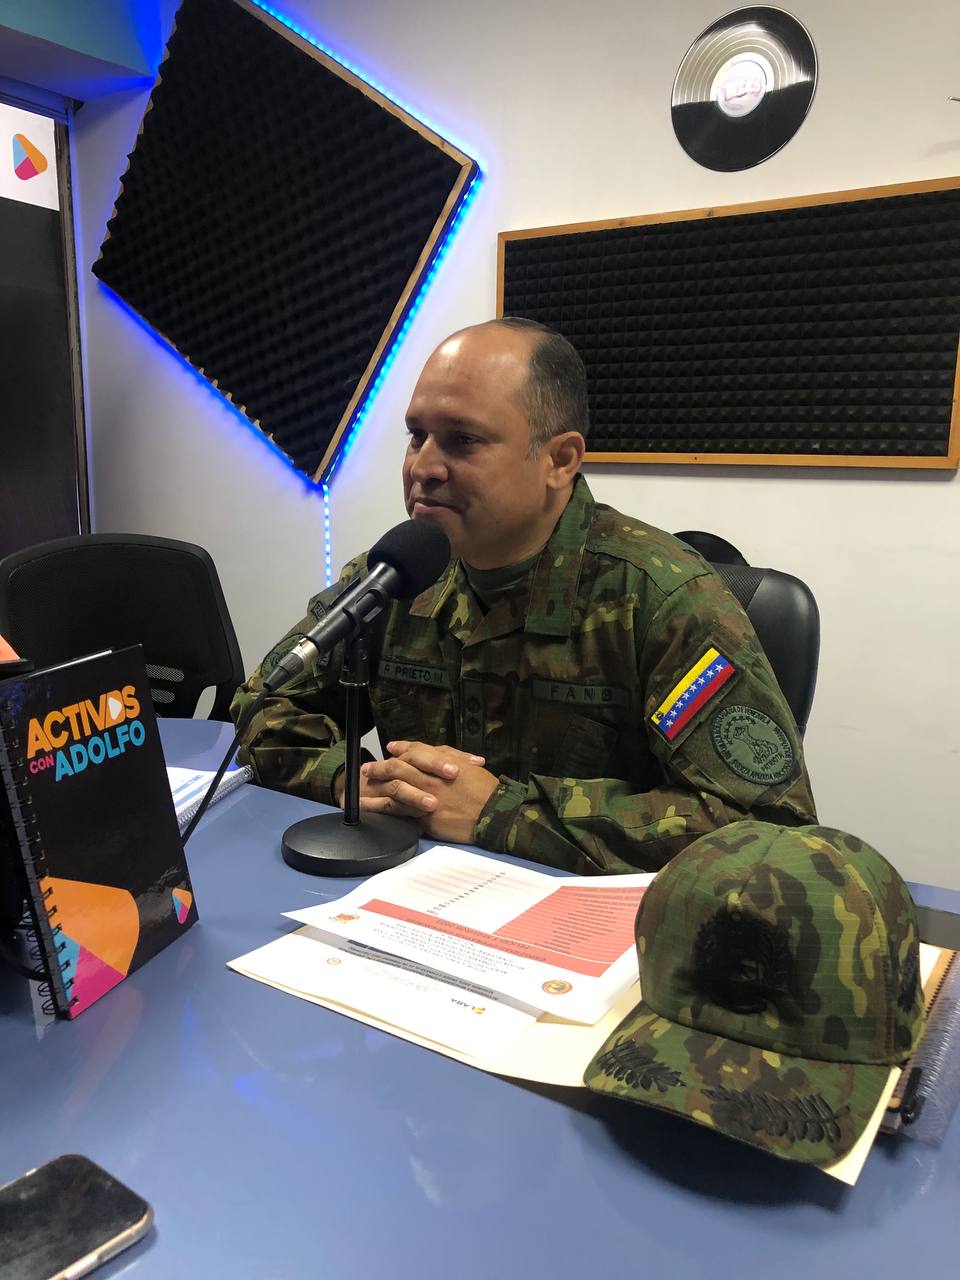 G/D Rafael Prieto Martínez, Comandante de la Zona Operativa de Defensa Integral (Zodi Lara